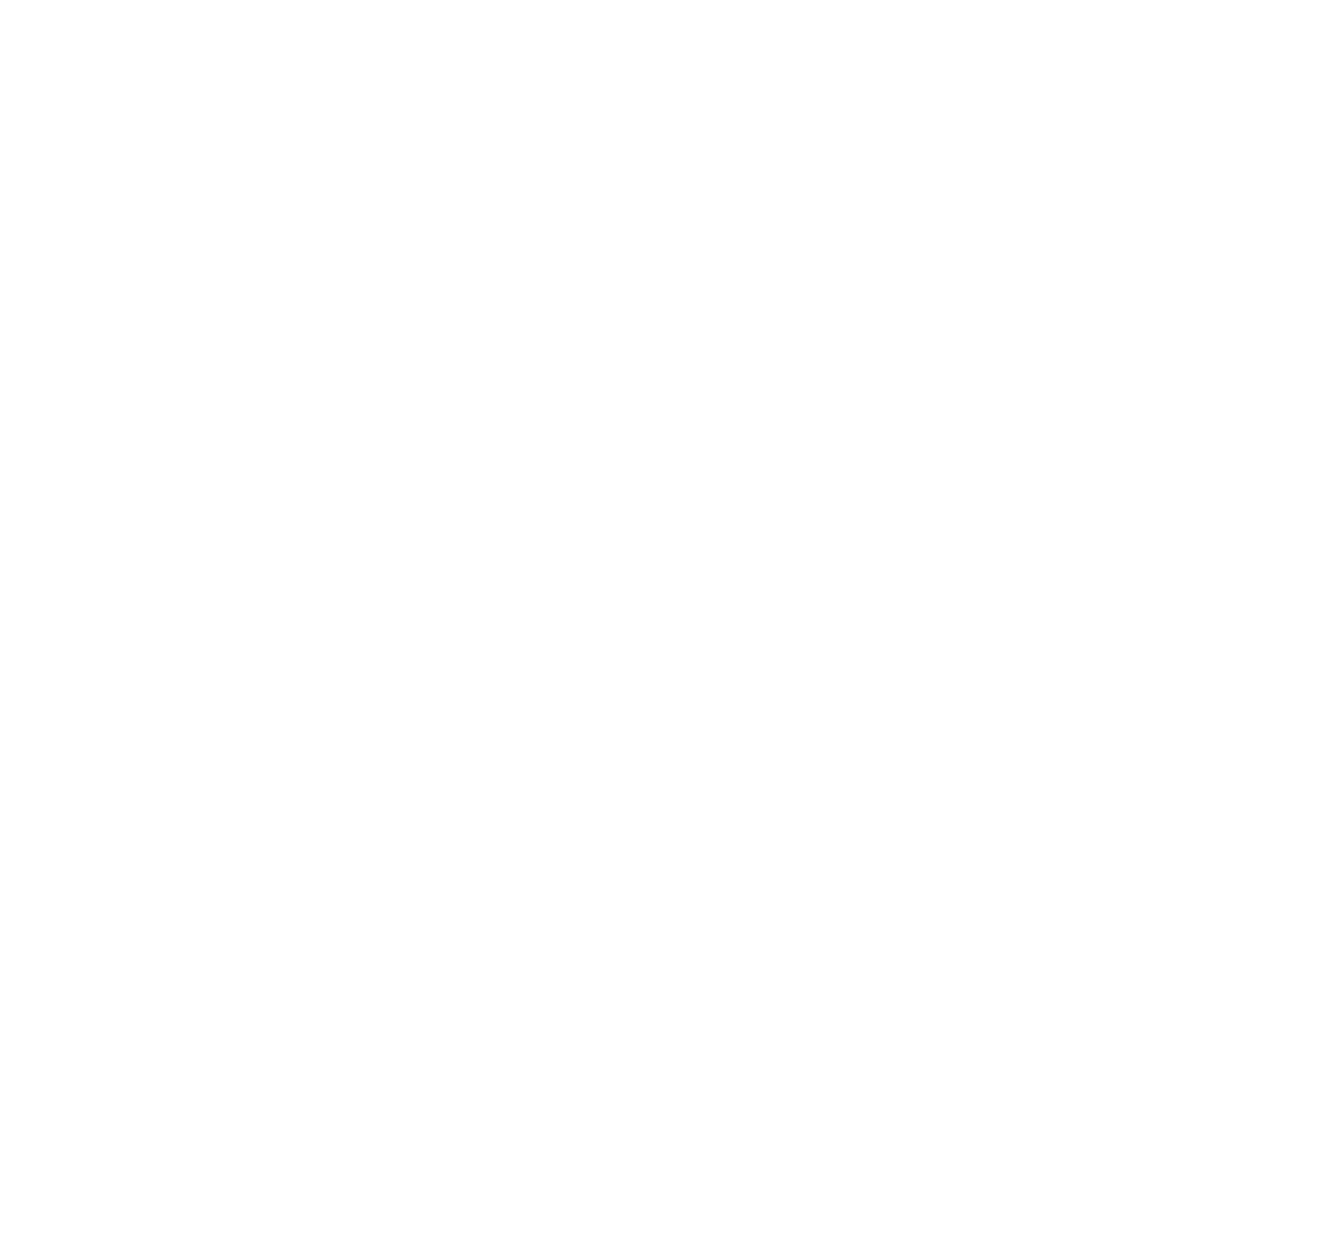 Farmers Butcher Shop